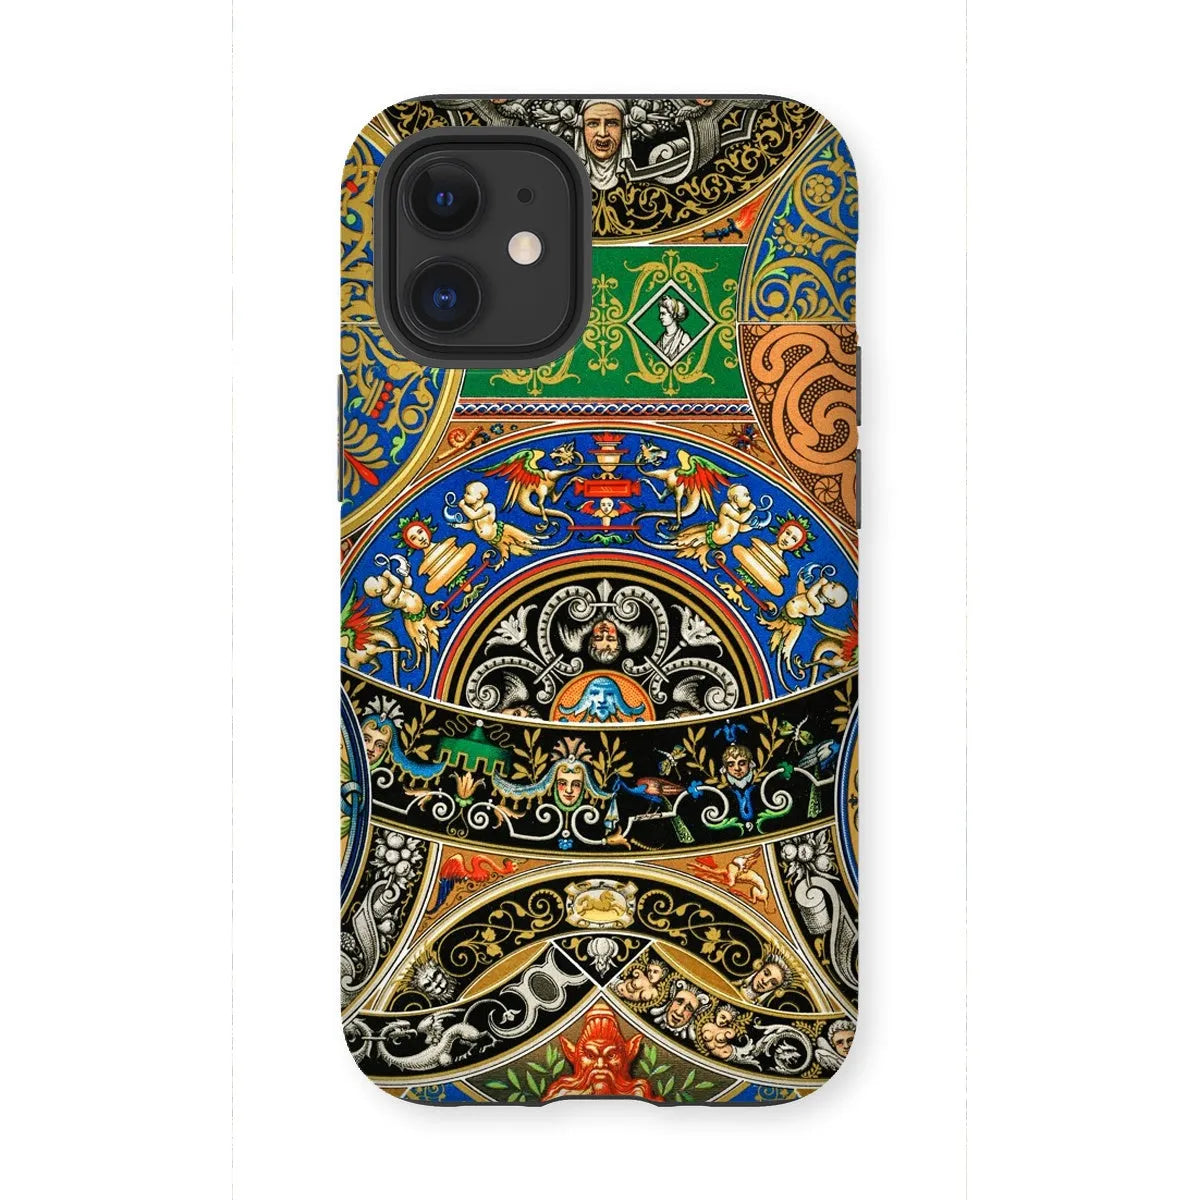 Renaissance Pattern 2 By Auguste Racinet Tough Phone Case - Iphone 12 Mini / Gloss - Mobile Phone Cases - Aesthetic Art